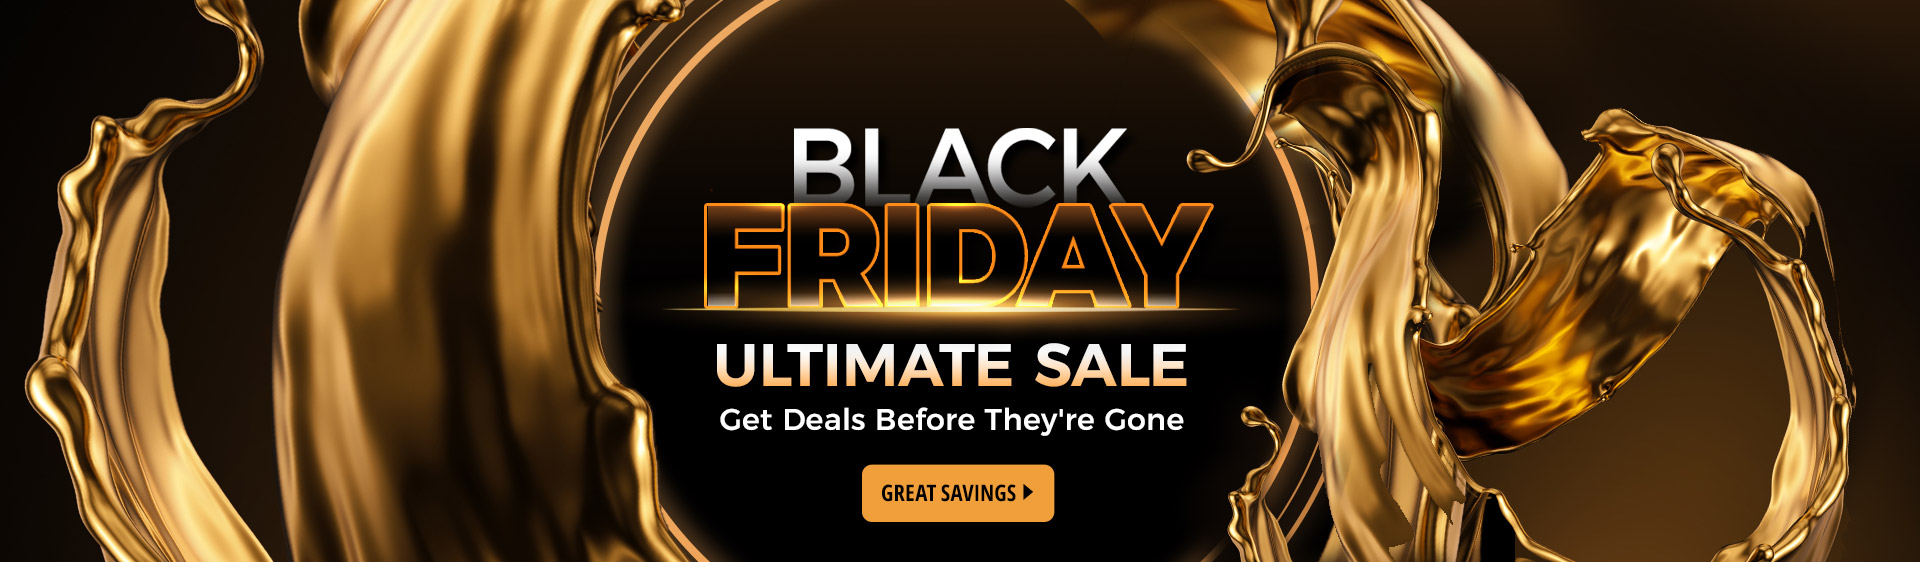 Black Friday Ultimate Sale